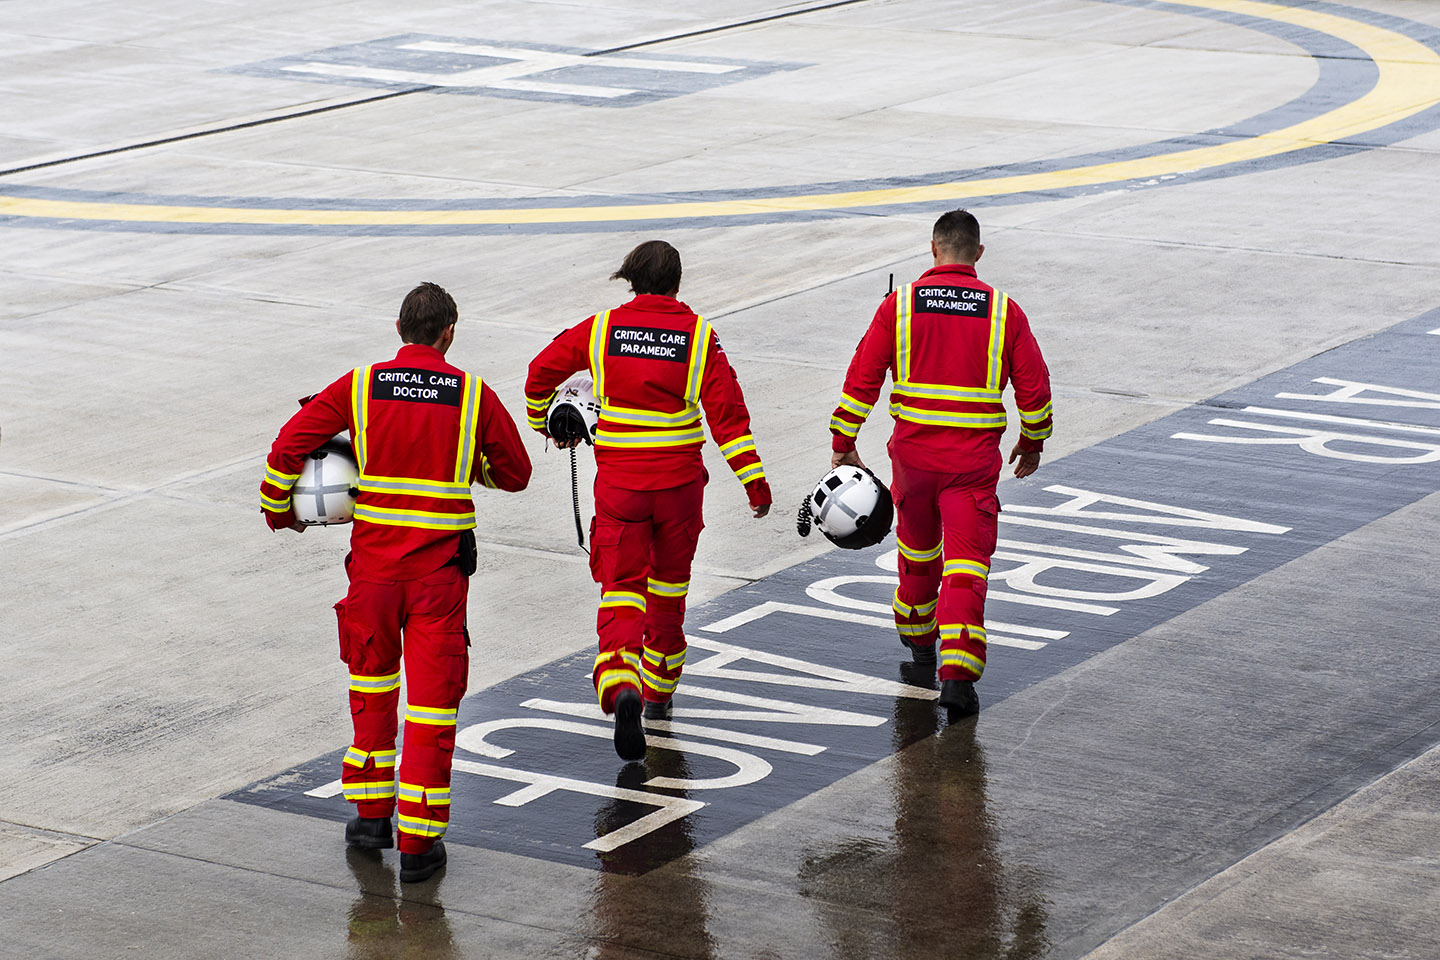 Three Cornwall Air Ambulance paramedics walking across the helicopter landing pad